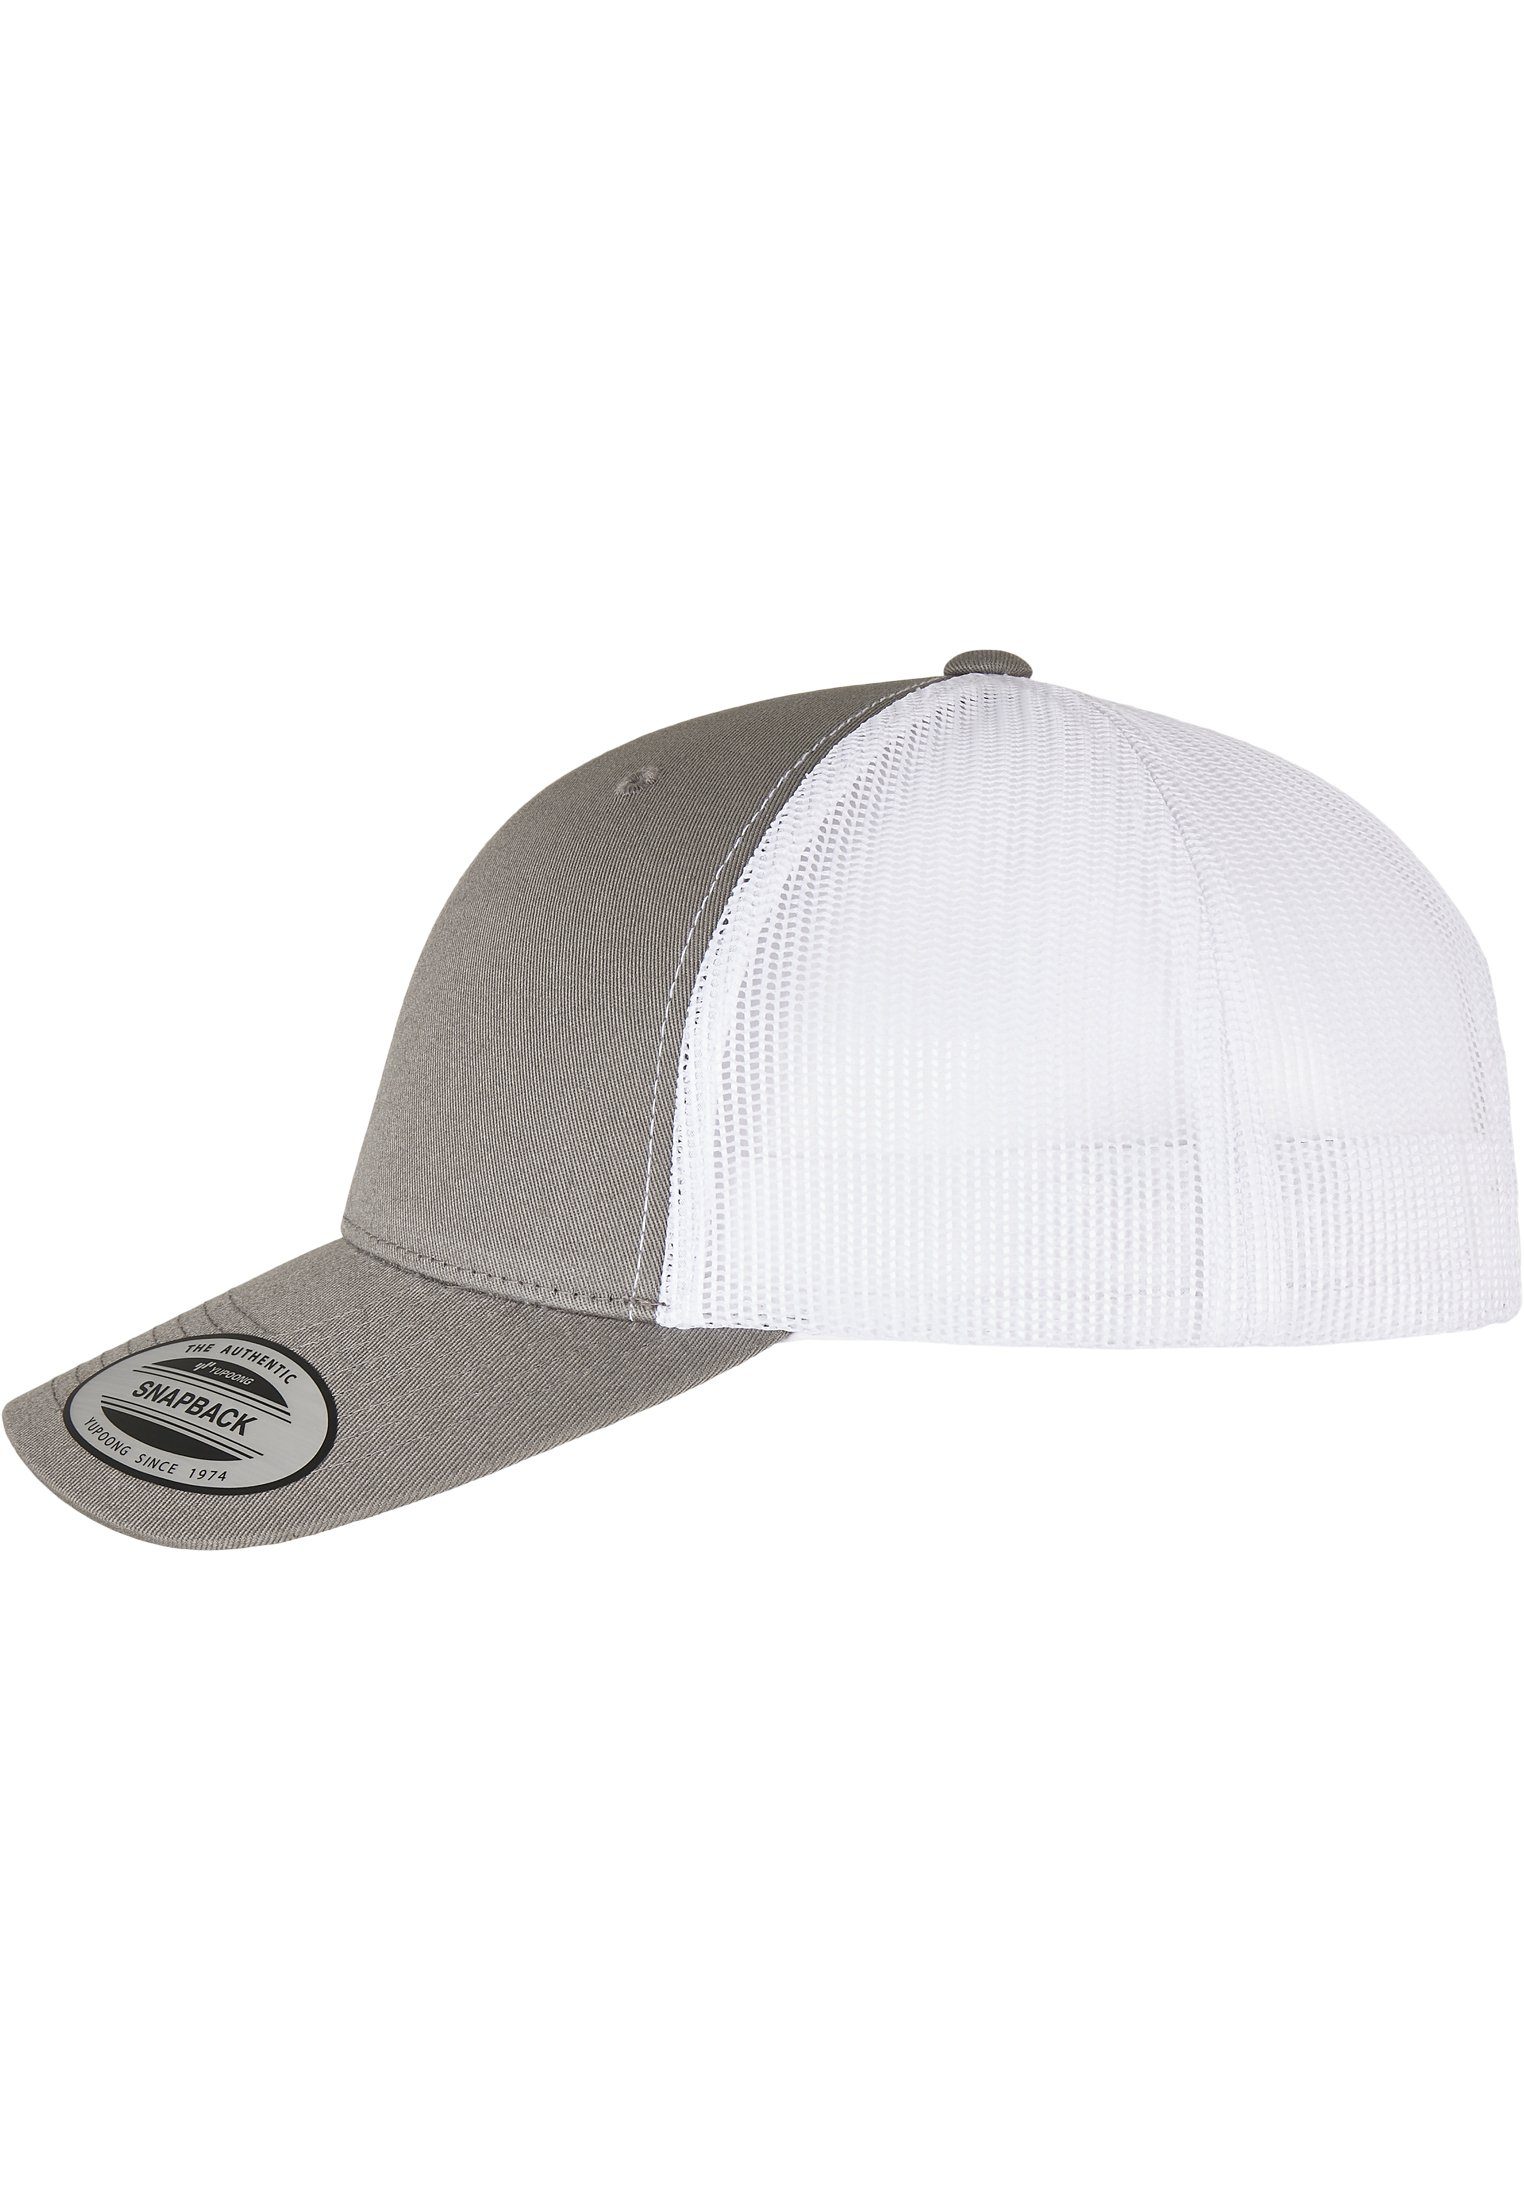 Flexfit Flex CLASSICS Caps CAP TRUCKER Cap grey/white YP RETRO RECYCLED 2-TONE